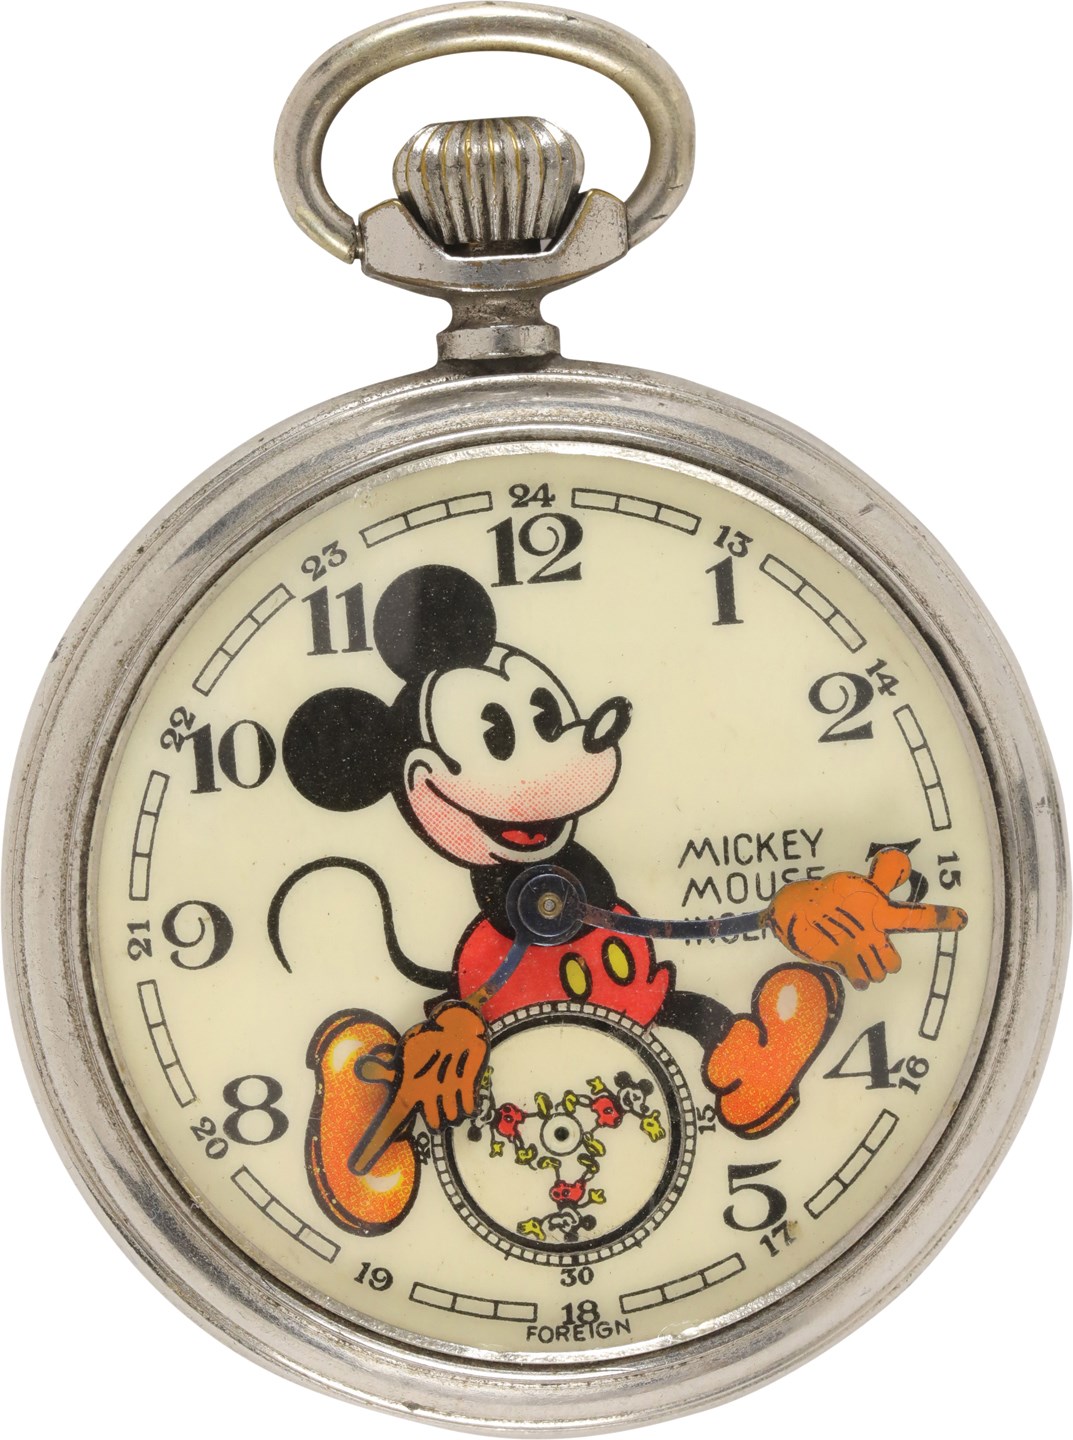 - 1934 Ingersoll Mickey Mouse Pocket Watch